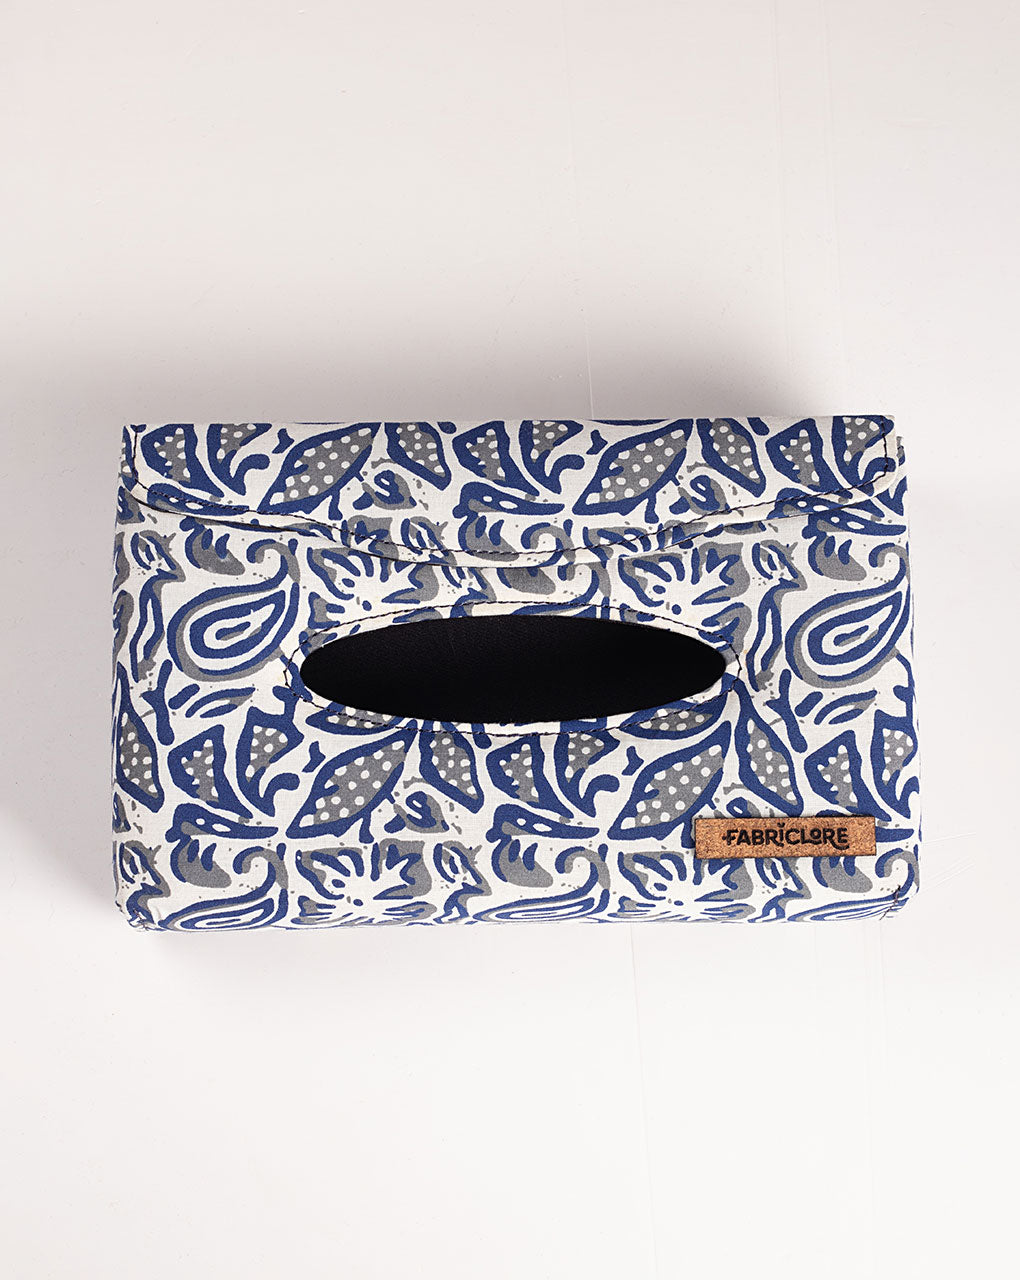 Tissue Box Dispenser - Fabriclore.com